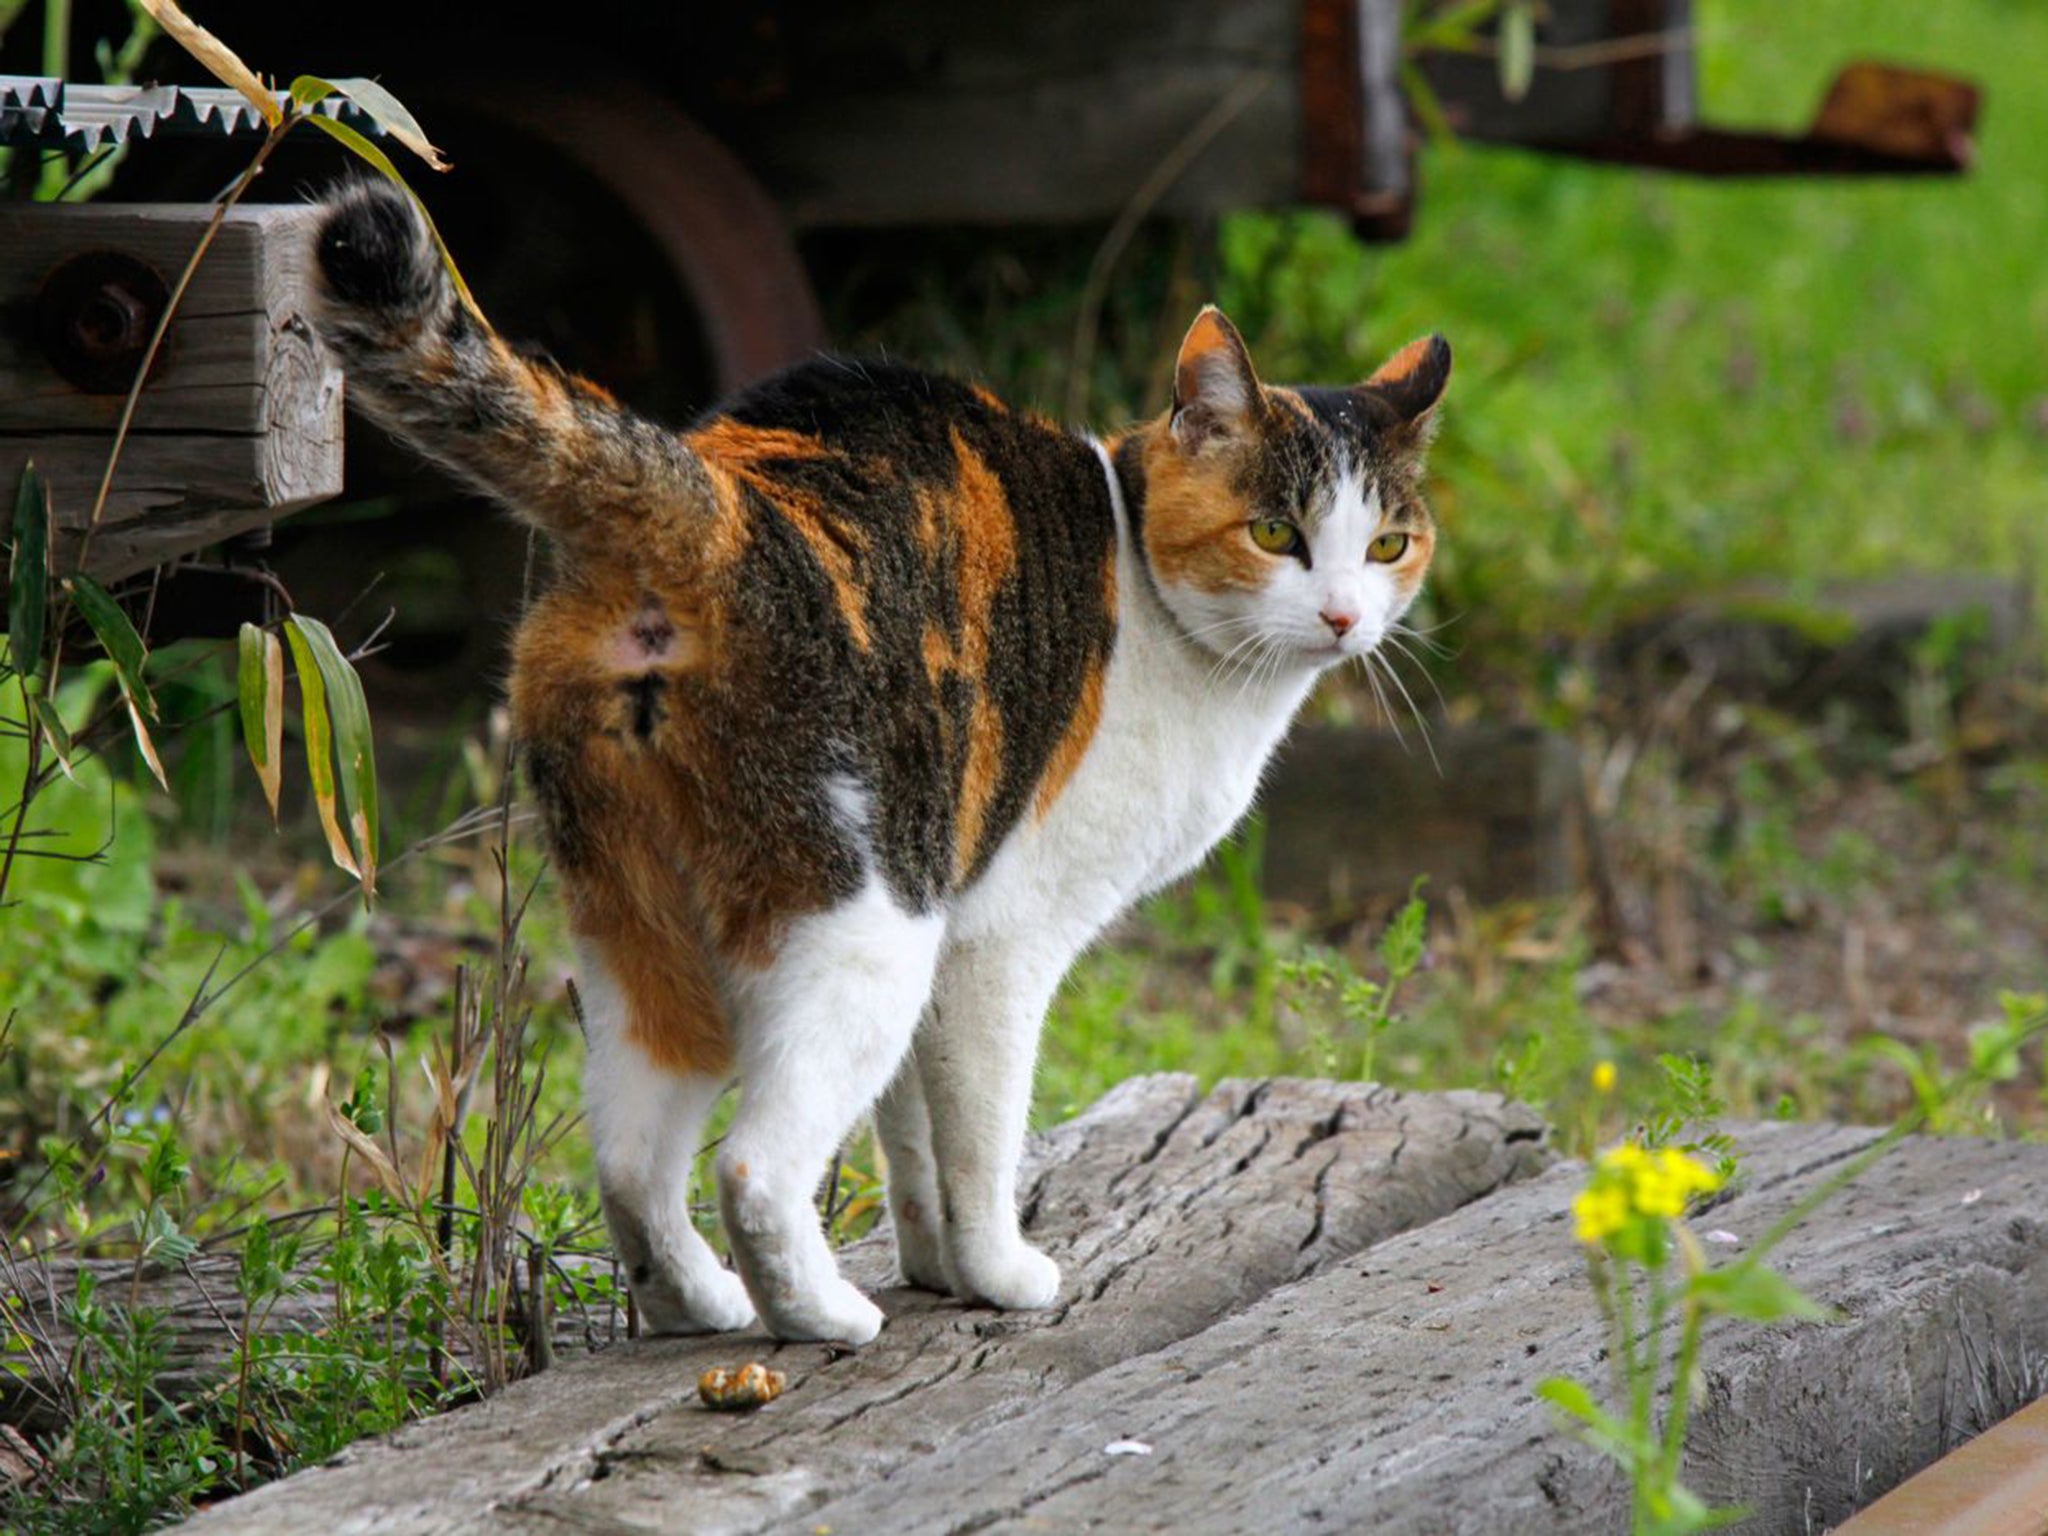 Calico felines have trendily asymmetric markings